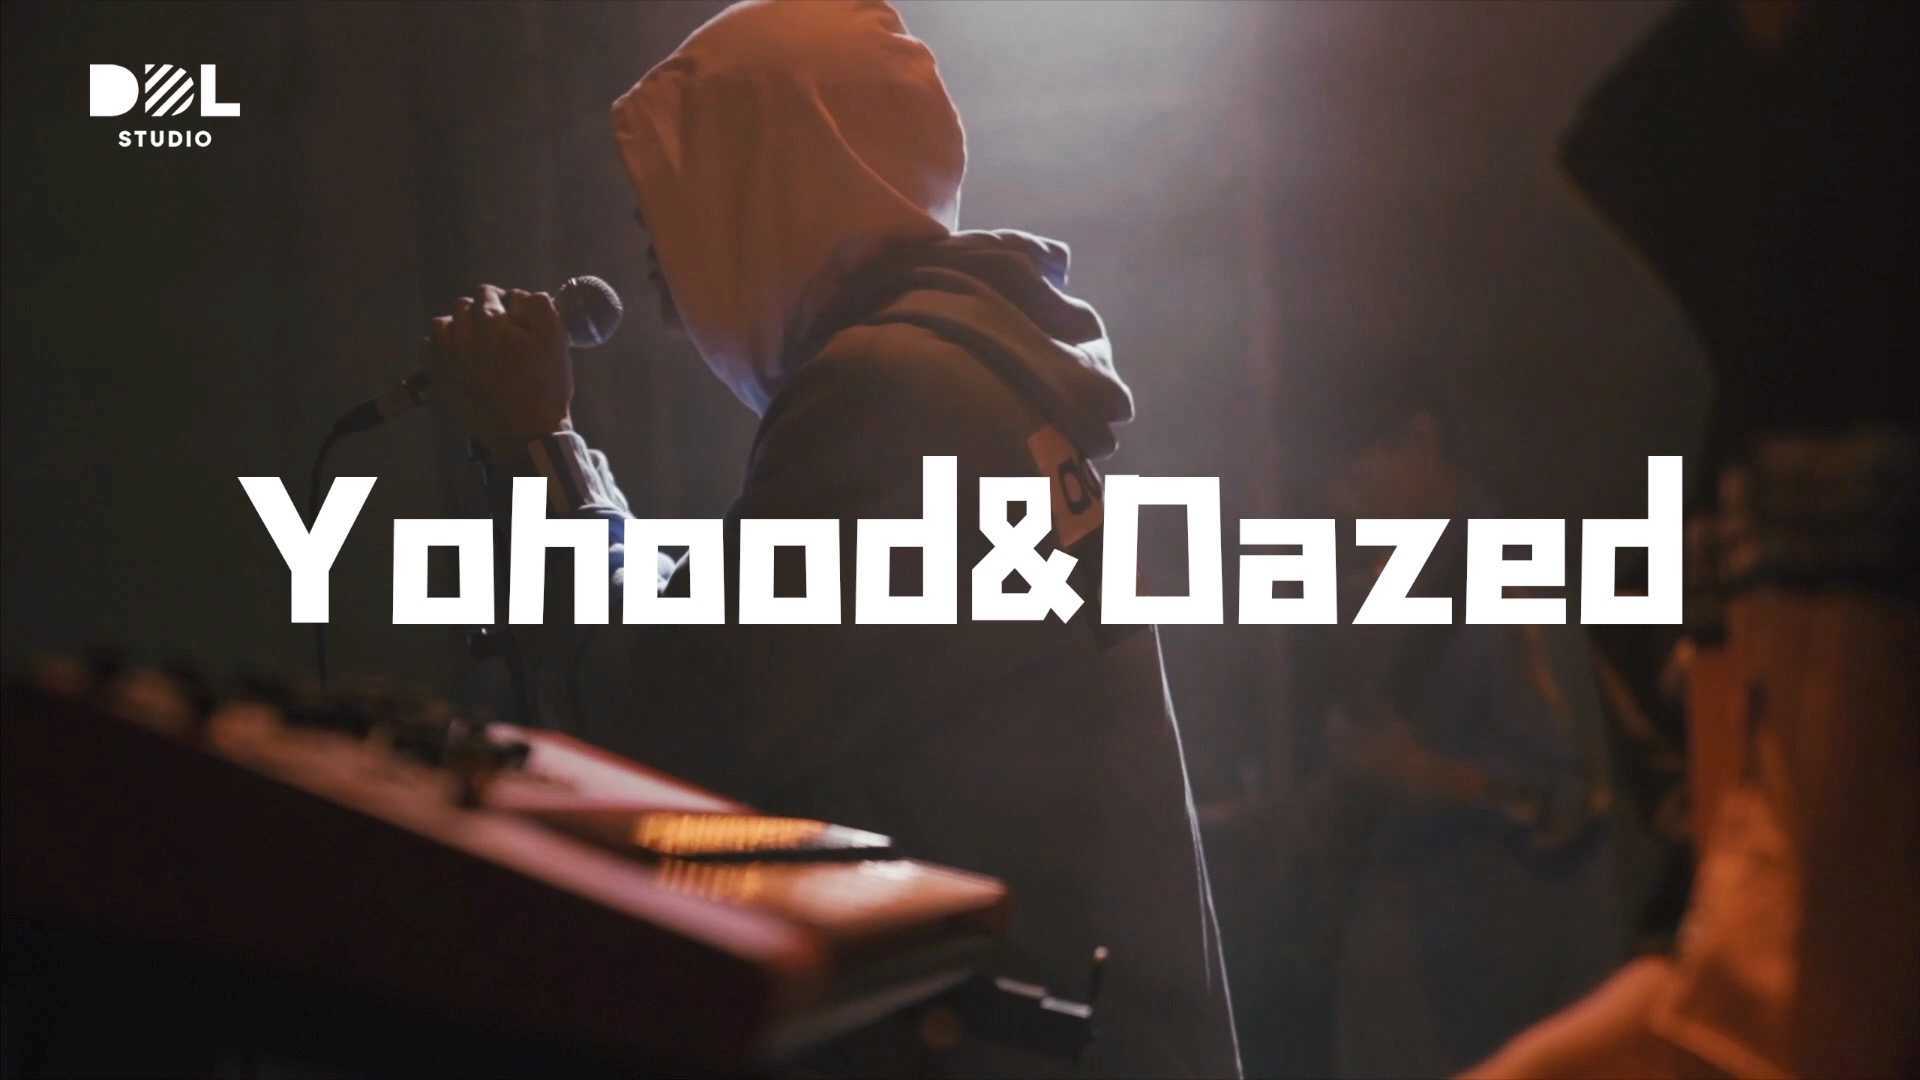 DDL STUDIO制作「Yohood & Dazed」活动宣传片